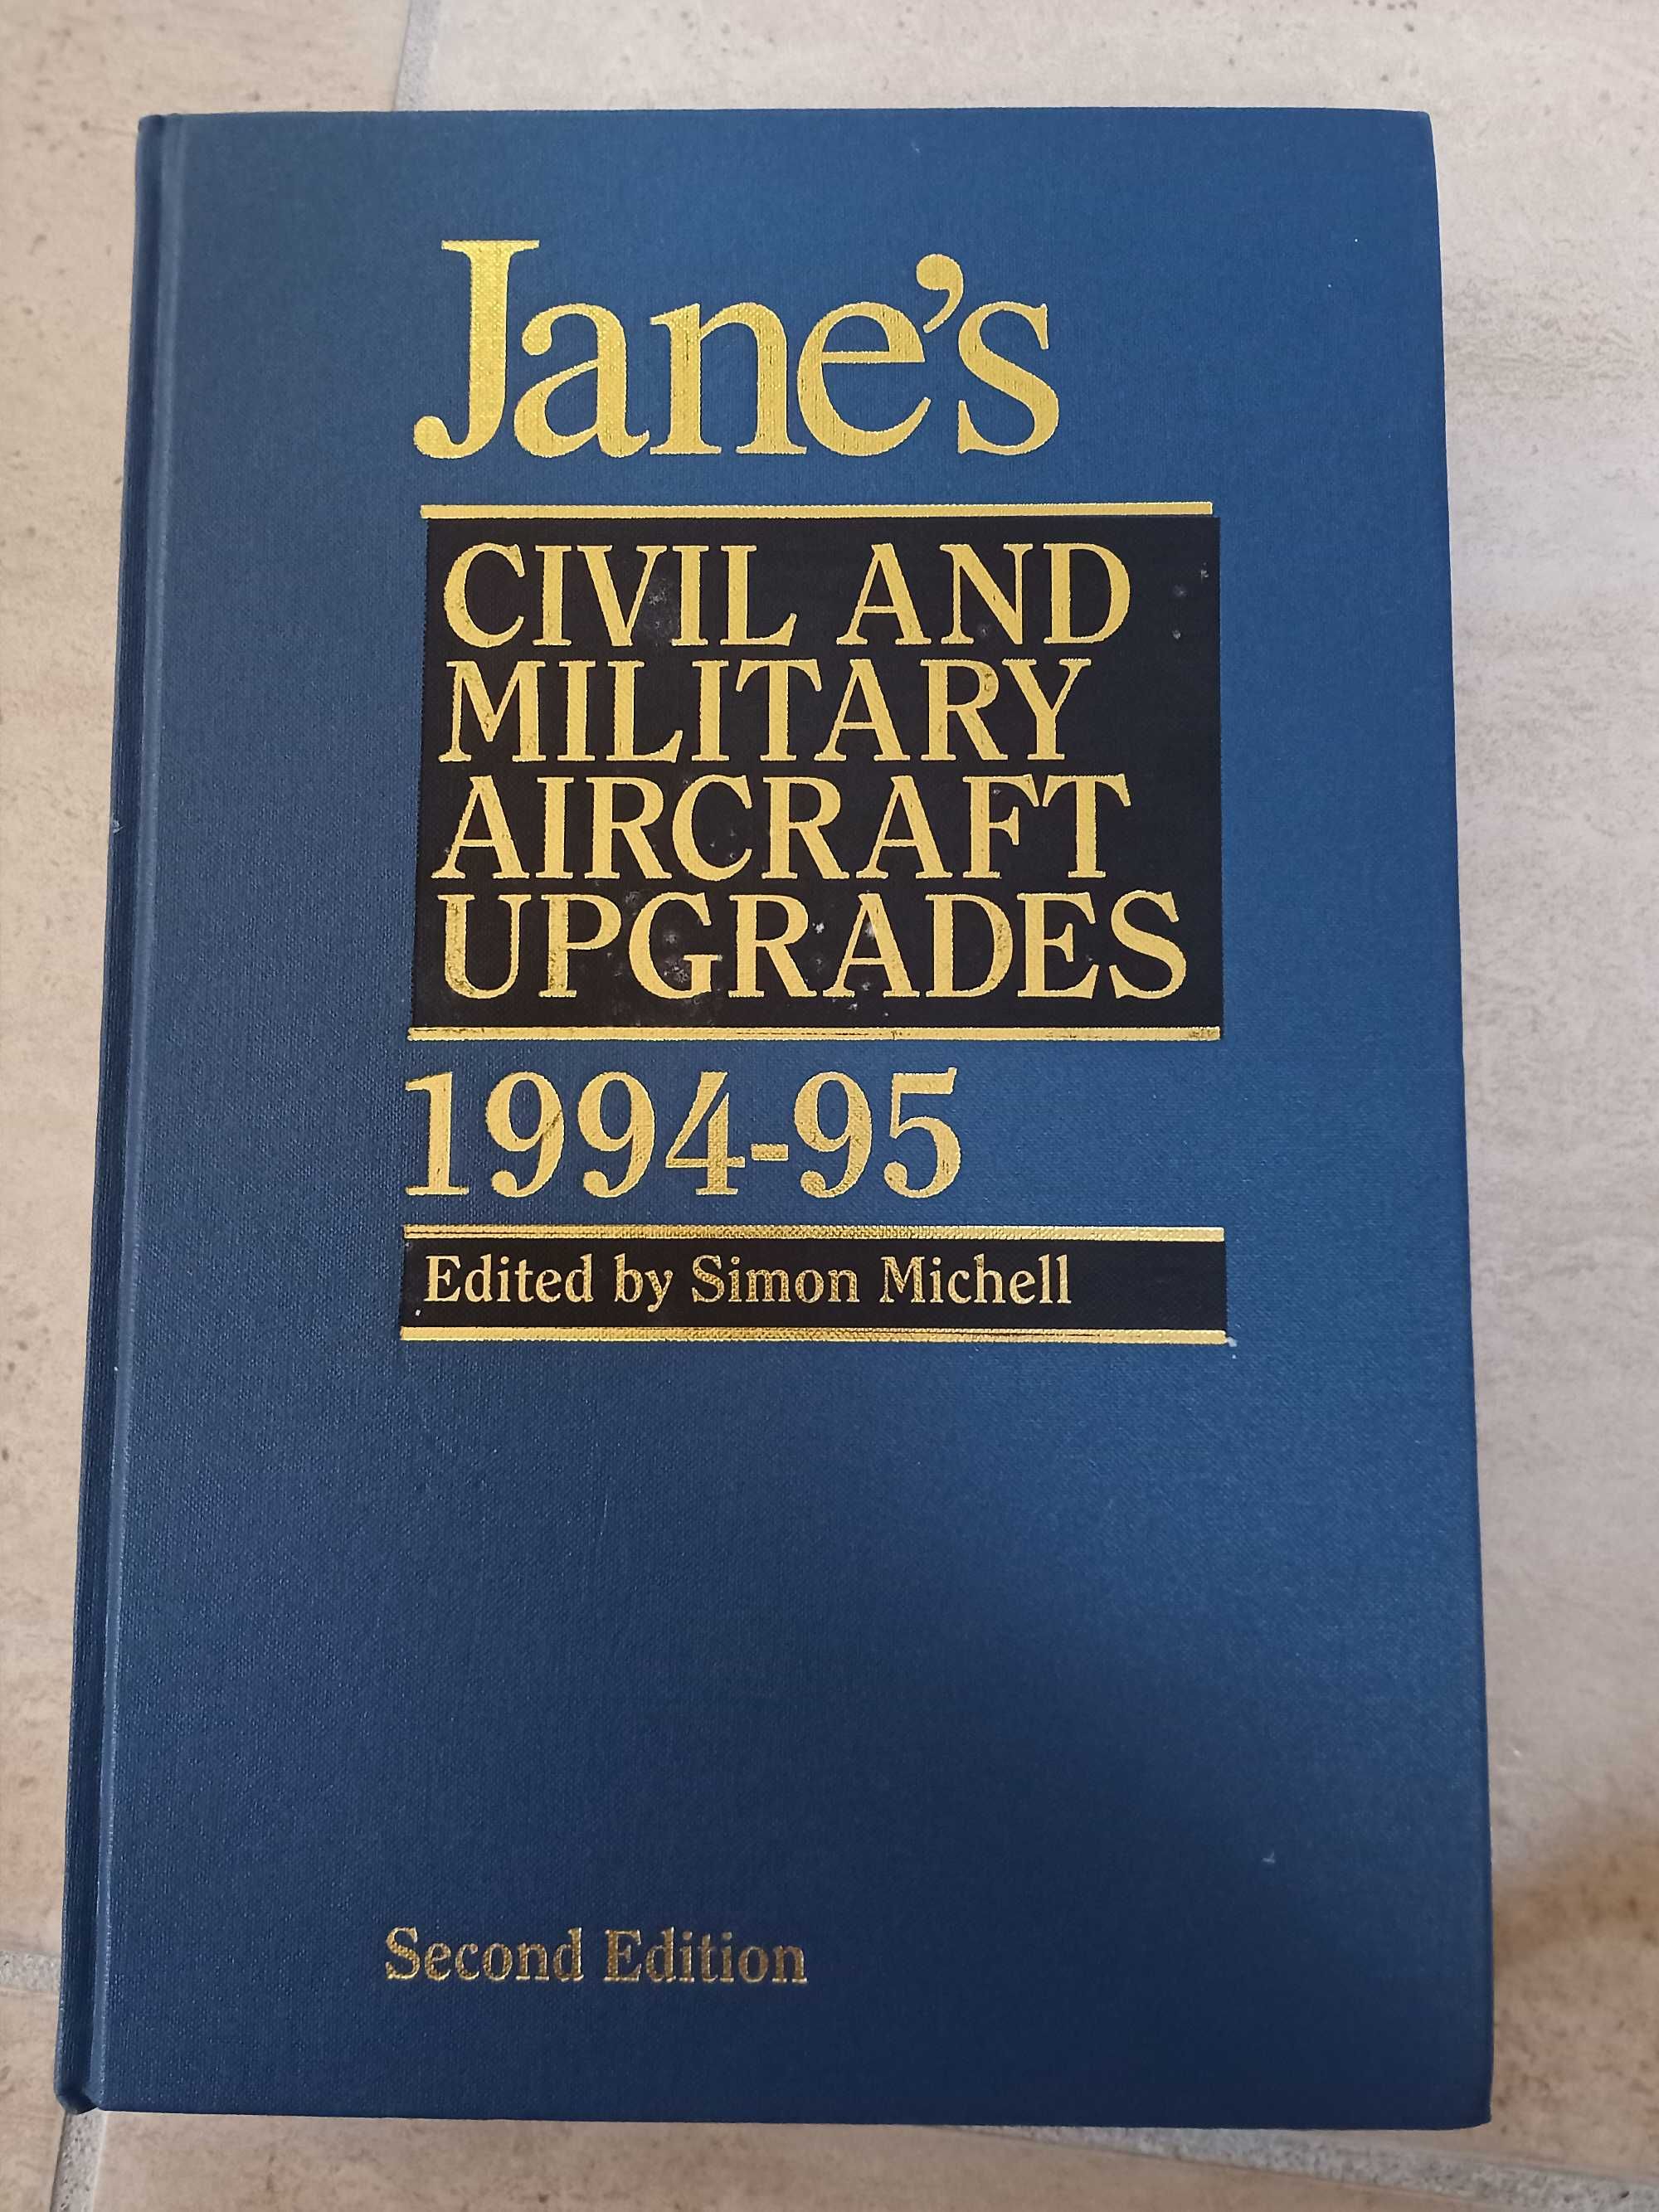 Jane's Civil and Military Upgrades